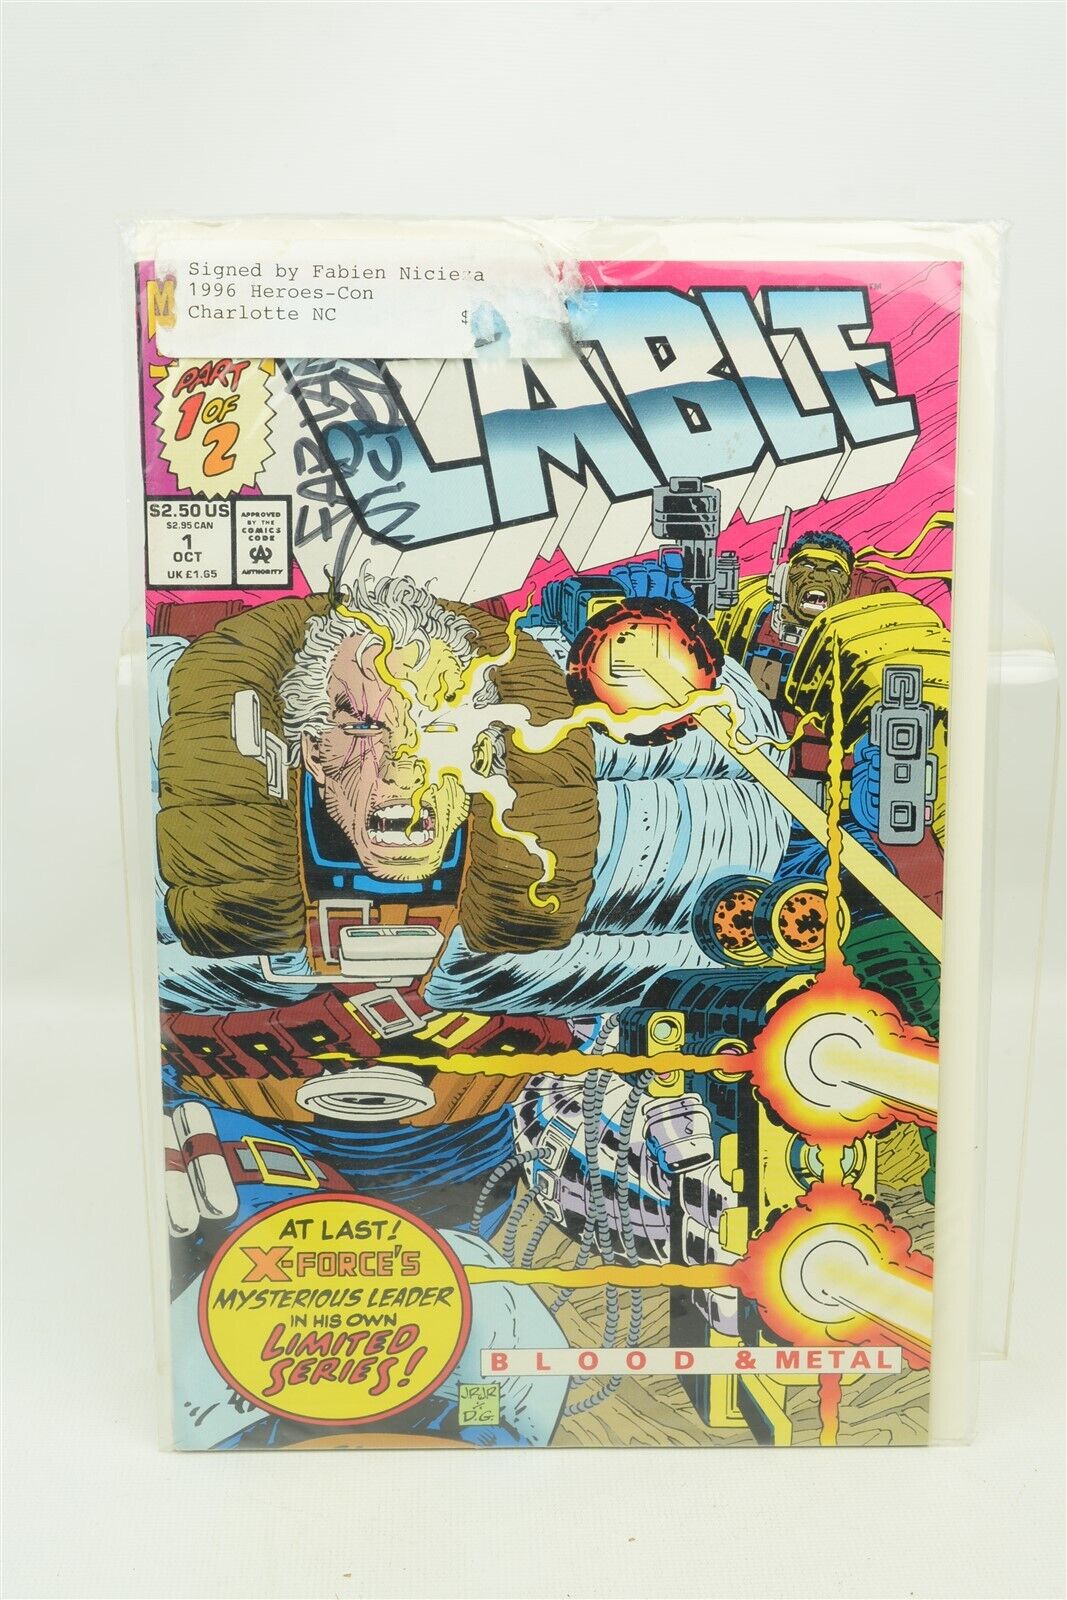 1992 Comic Book Cable Blood & Metal Vol. 1 #1 October Fabian Nicieza Autograph